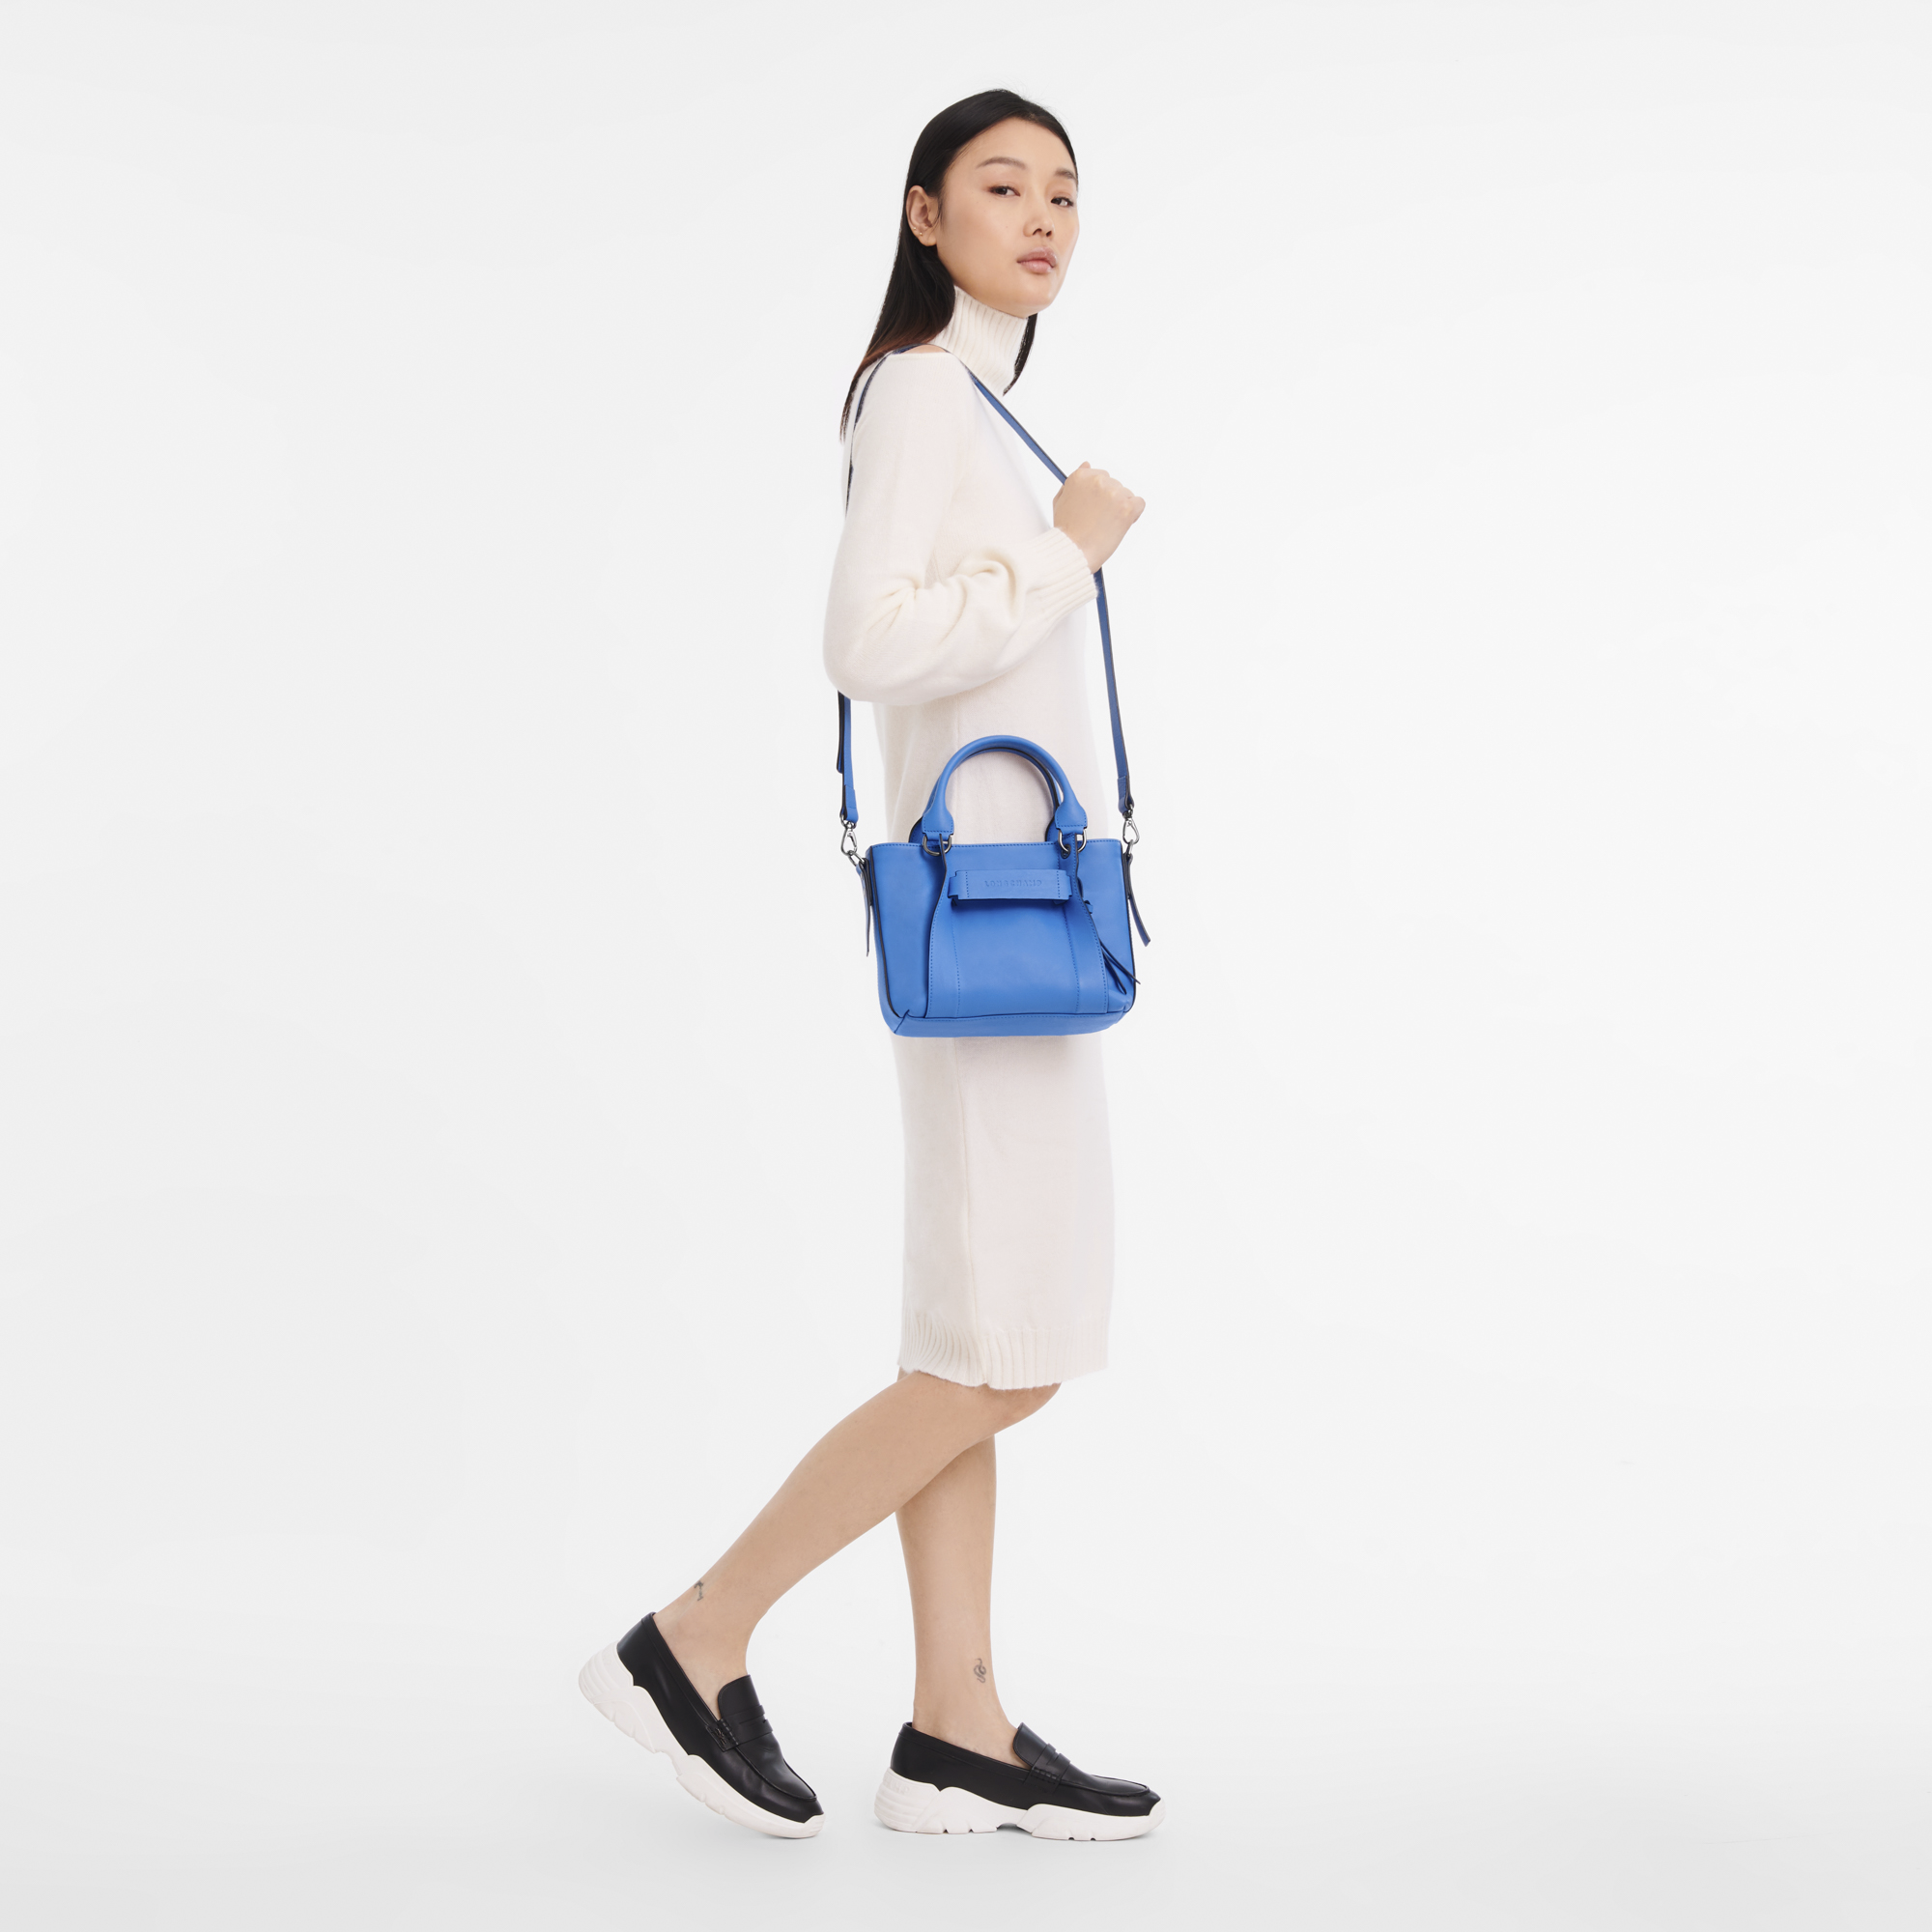 Longchamp 3D Handbag S, Cobalt